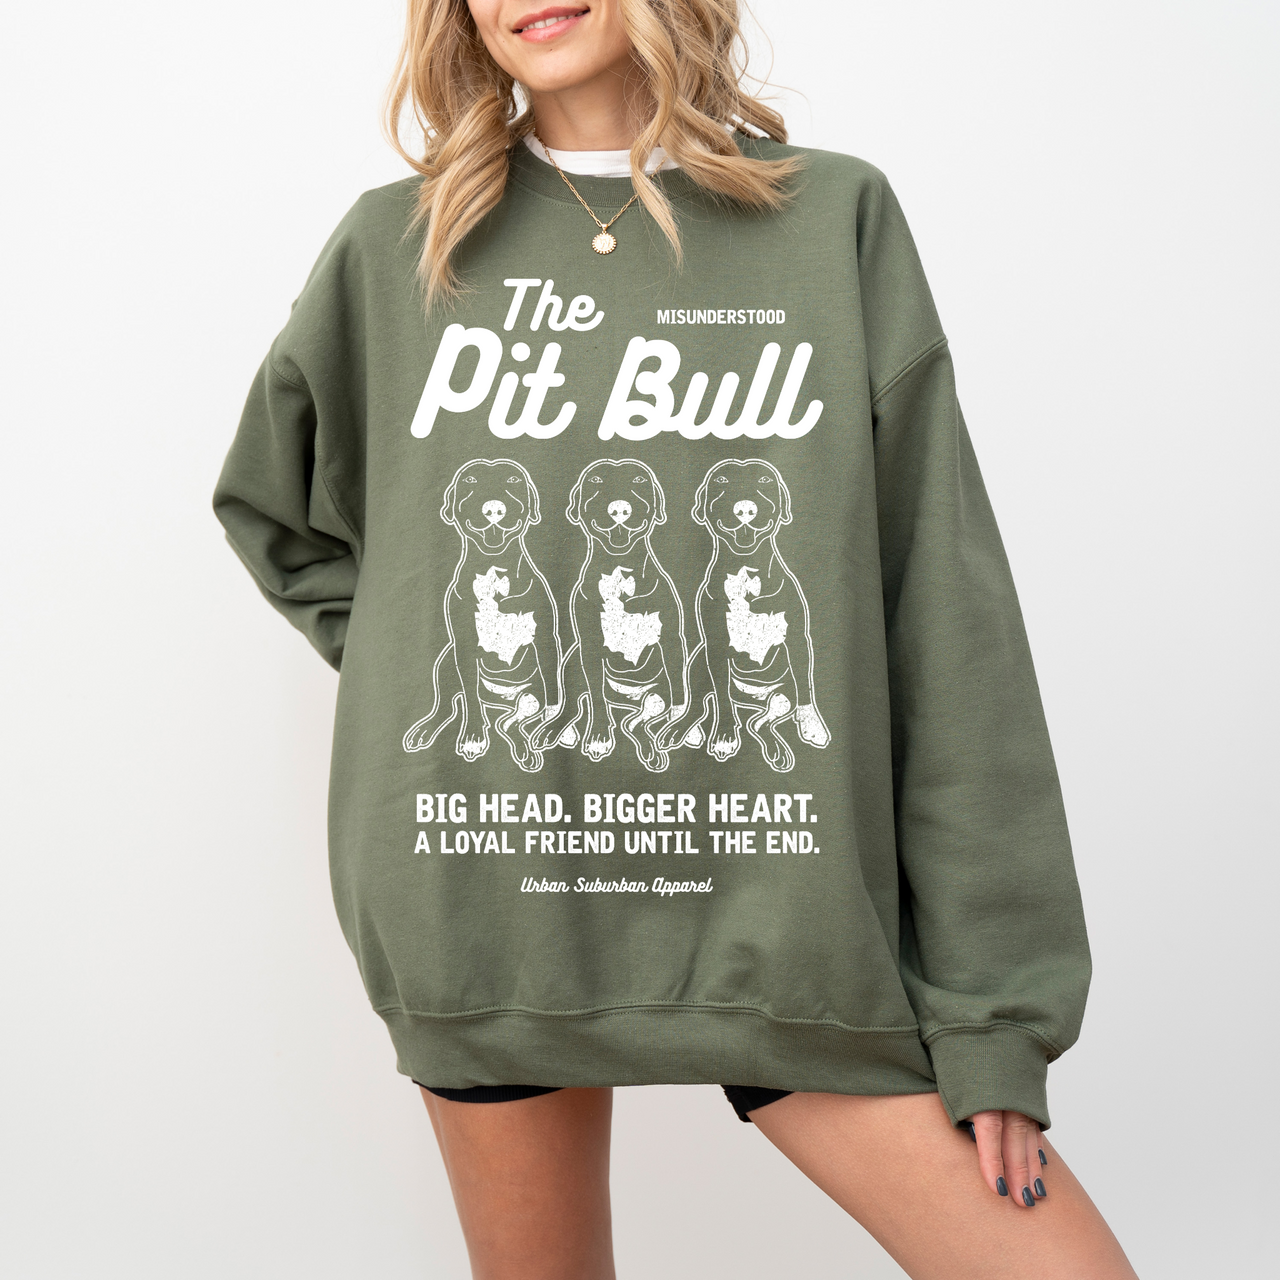 THE PIT BULL Army Sweater - Urban Suburban Apparel